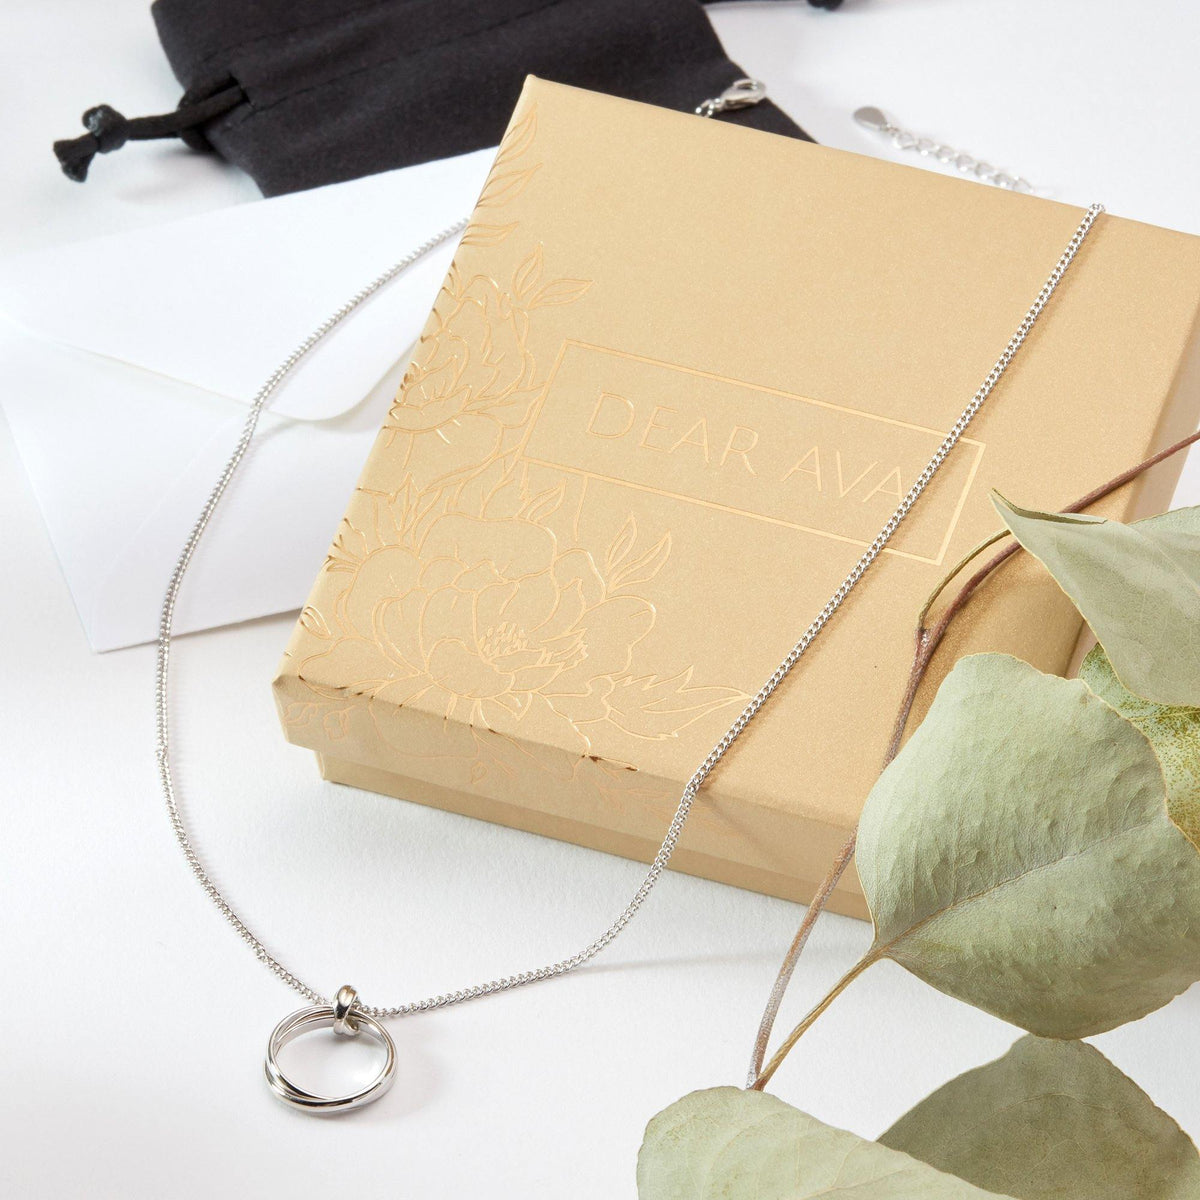 70th Birthday Gift Necklace - Dear Ava